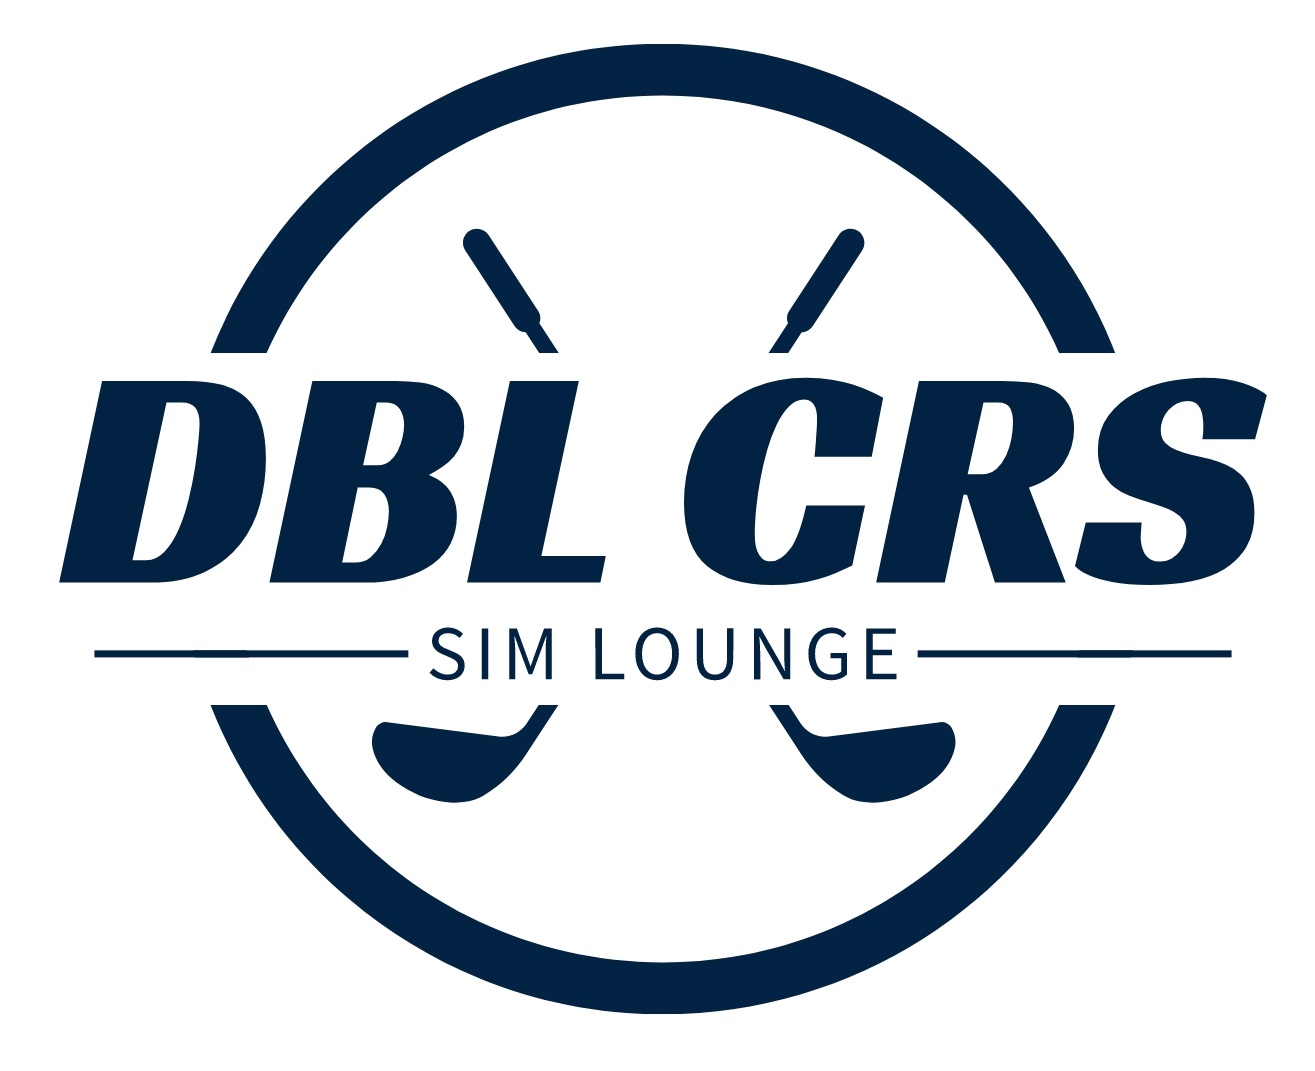 DBLCRS Sim Lounge